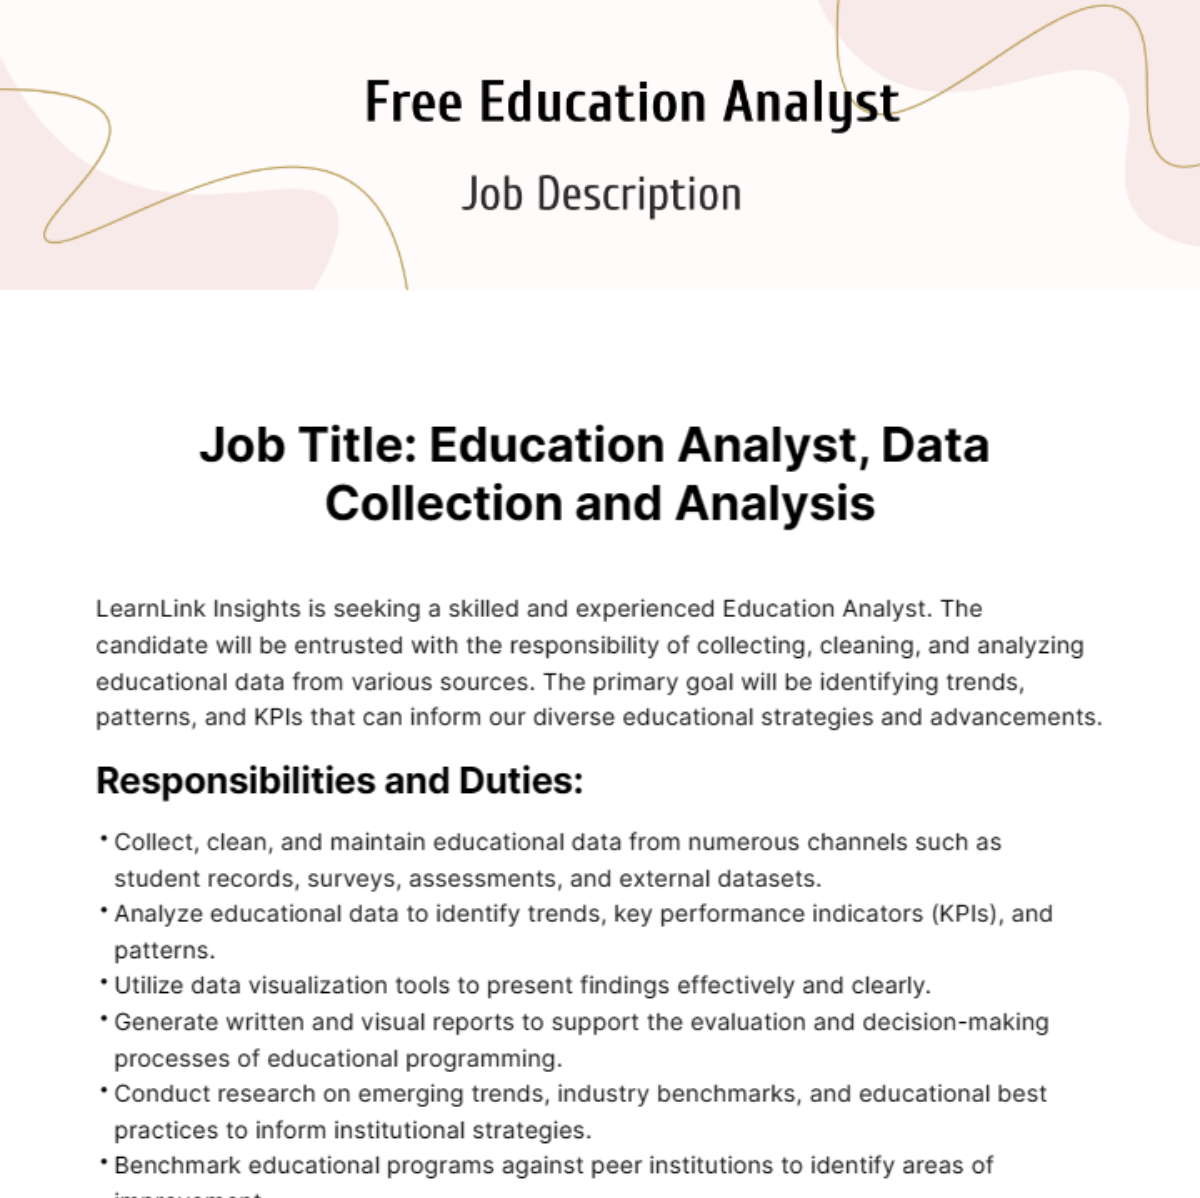 Free Education Analyst Job Description Template